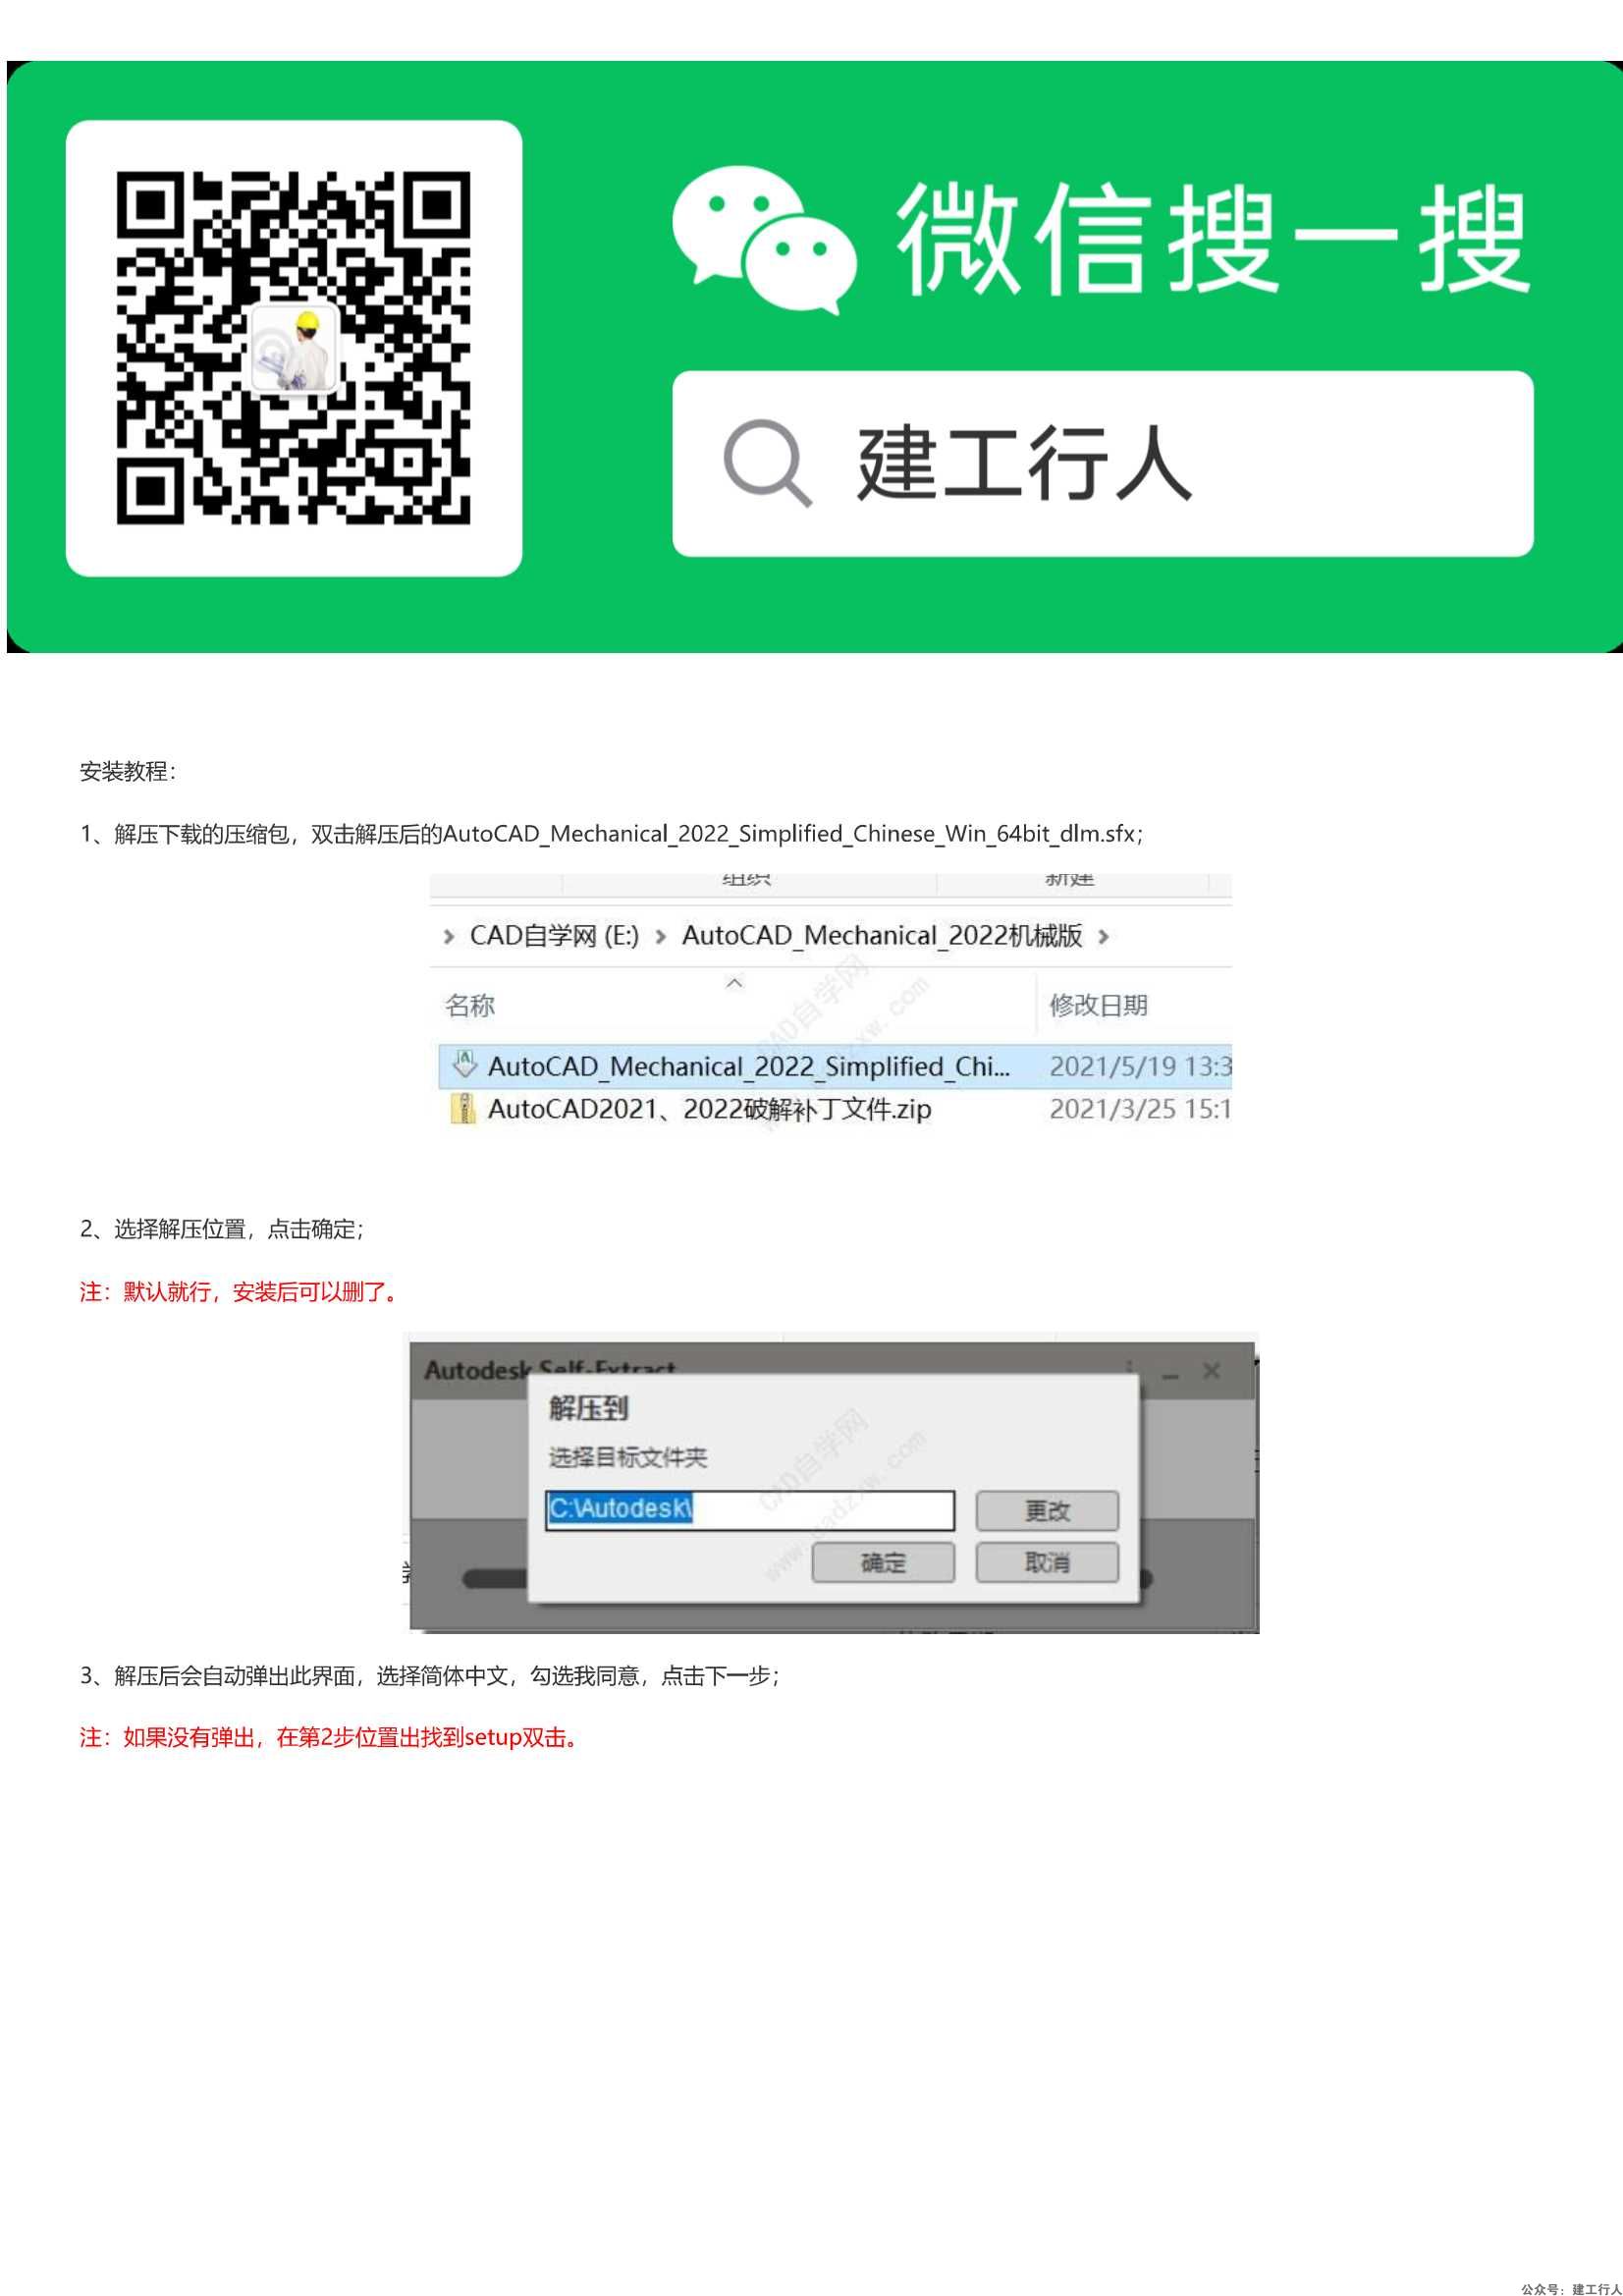 AutoCAD2022 中文机械版安装破解激活教程 _0001.Jpeg